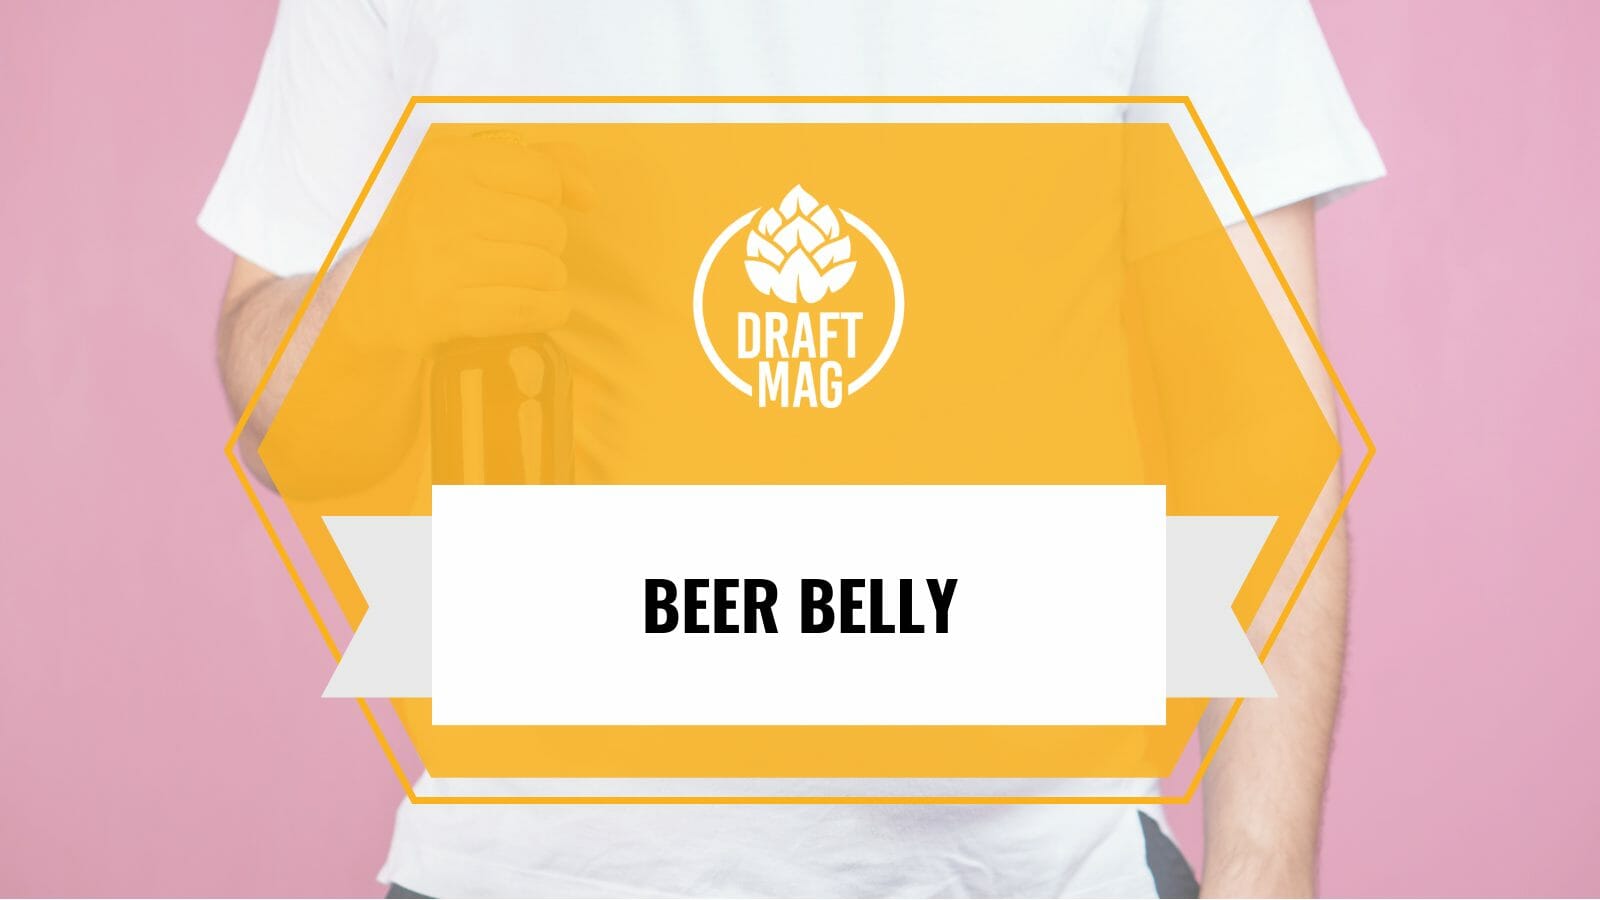 Beer belly guide